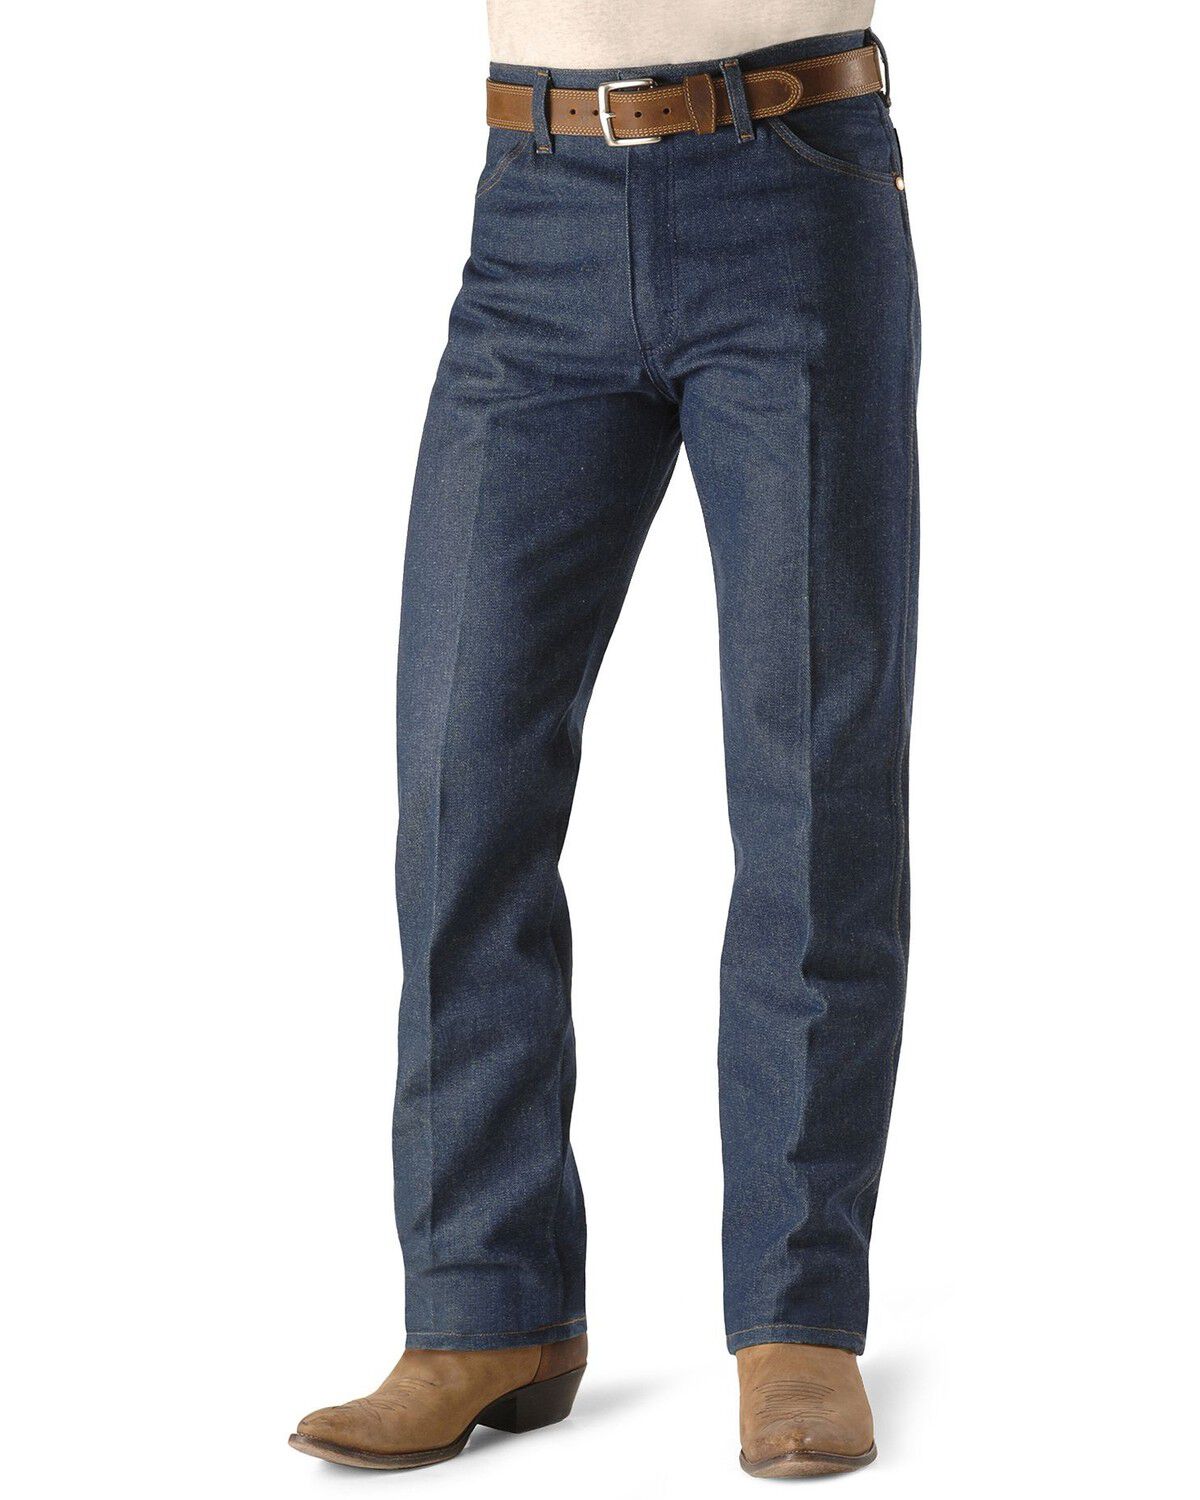 Wrangler Rigid Denim Jeans Big and Long Inseams 